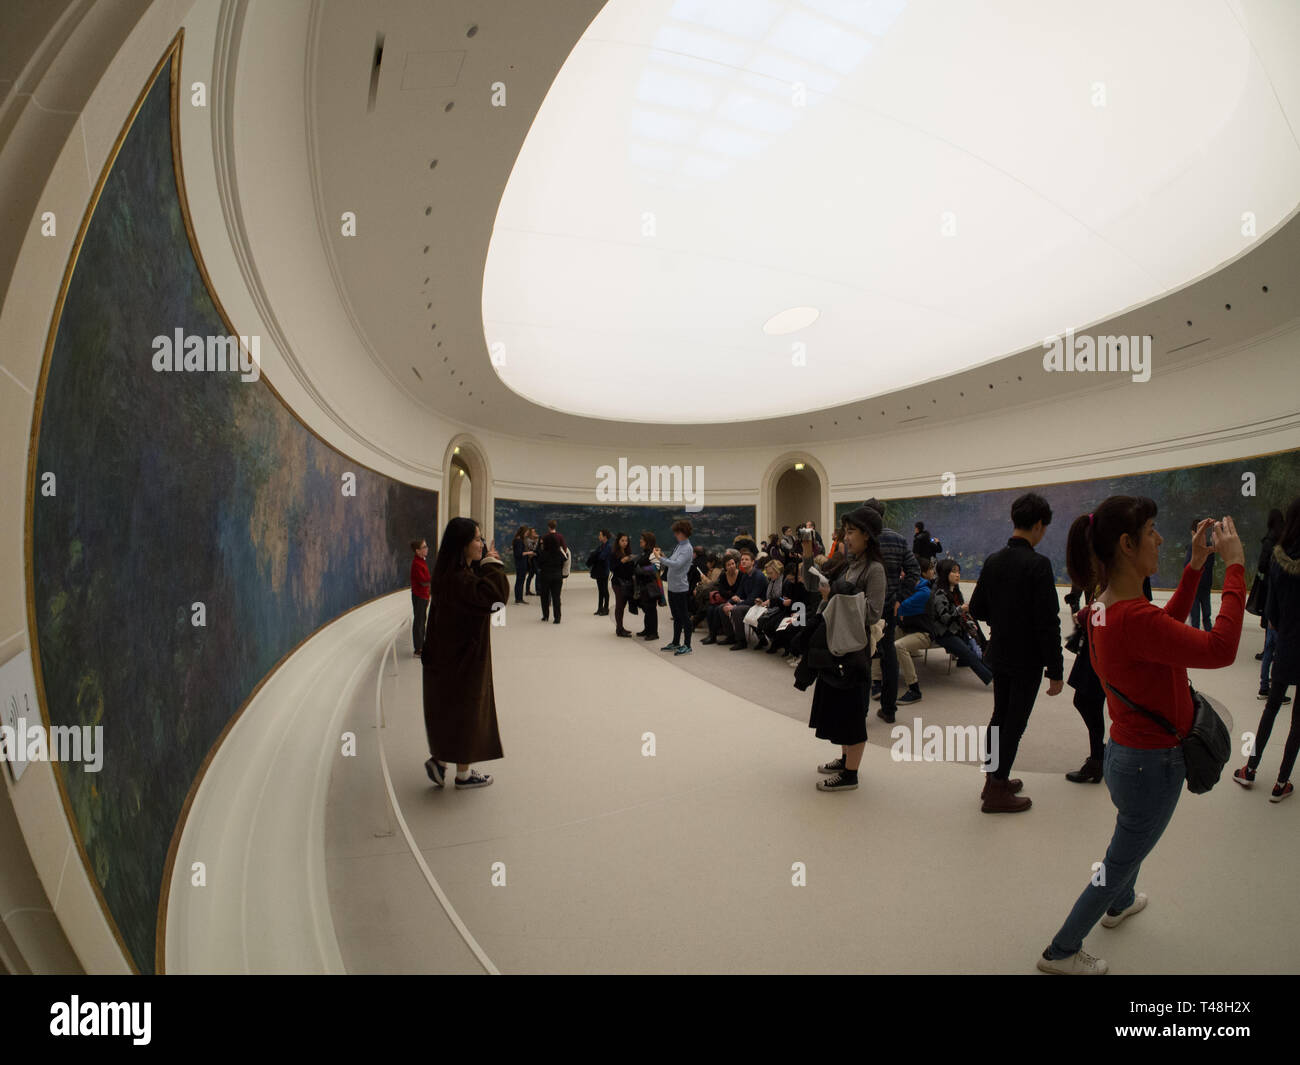 Monets Seerosen im gekrümmten Raum des Musée de l'Orangerie Stockfoto